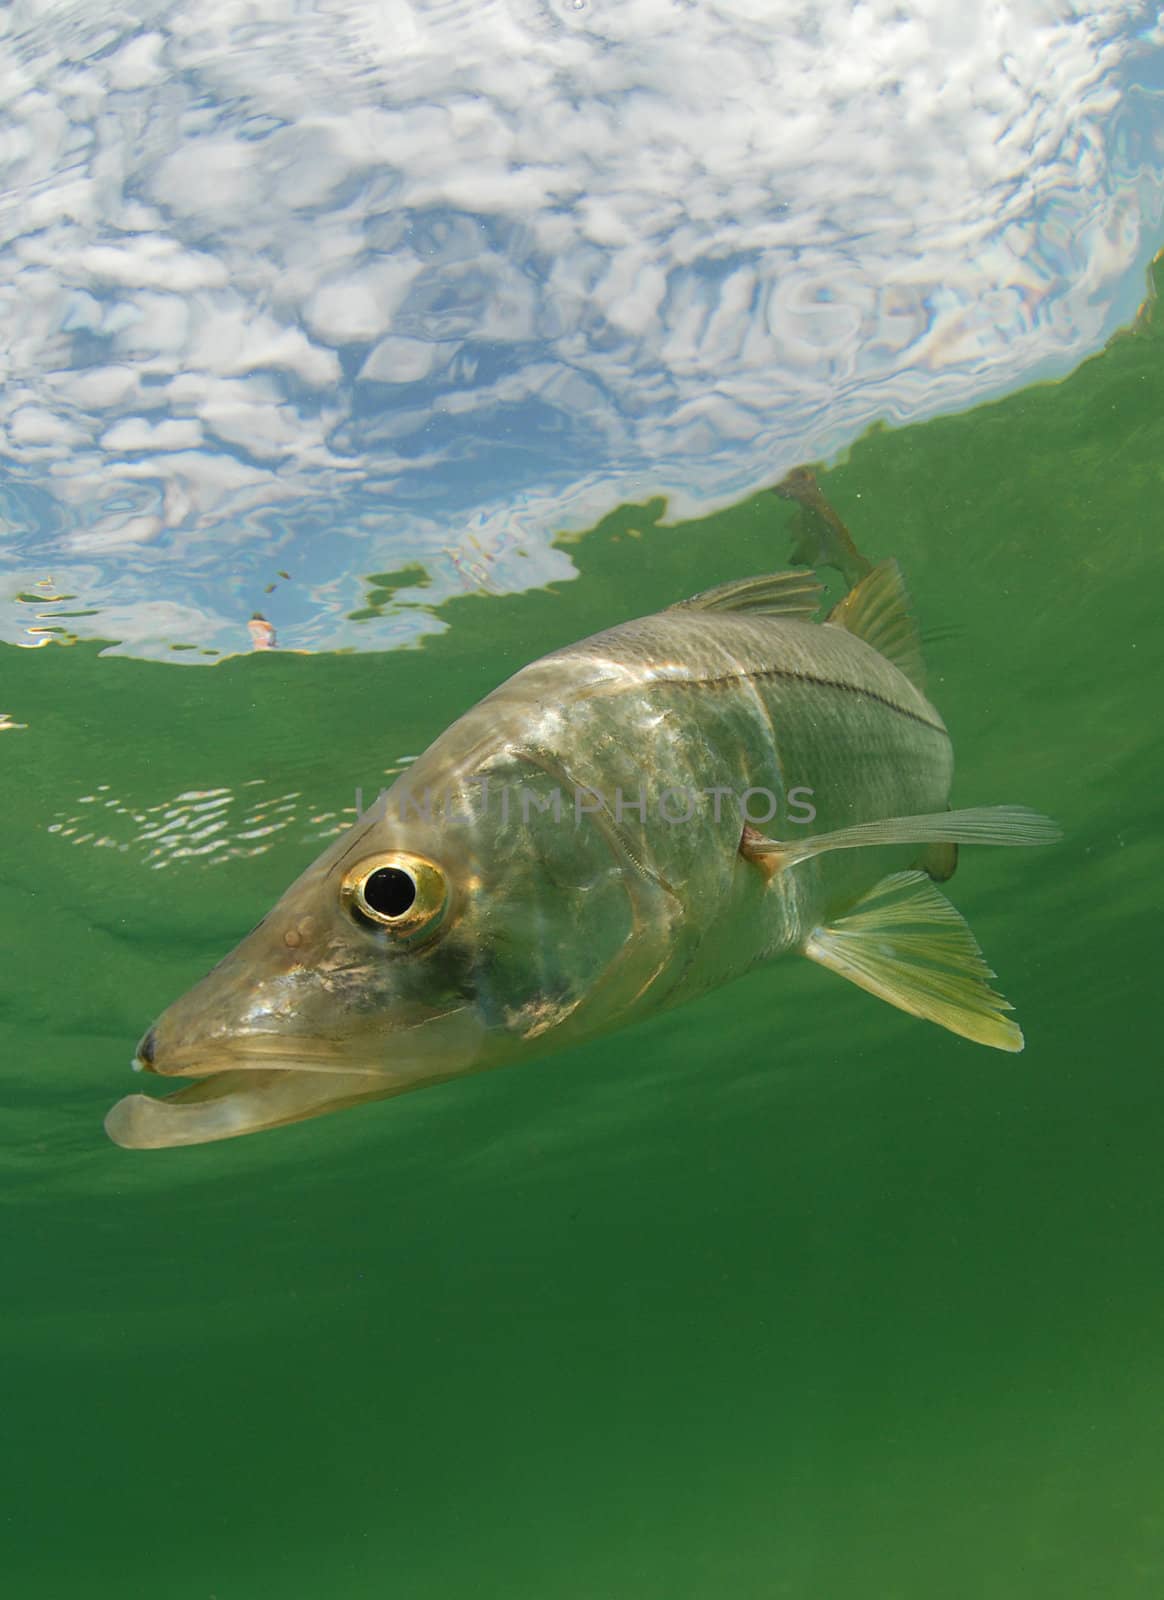 Snook fish swimming in the Atlantic Ocean off the coast of Florida